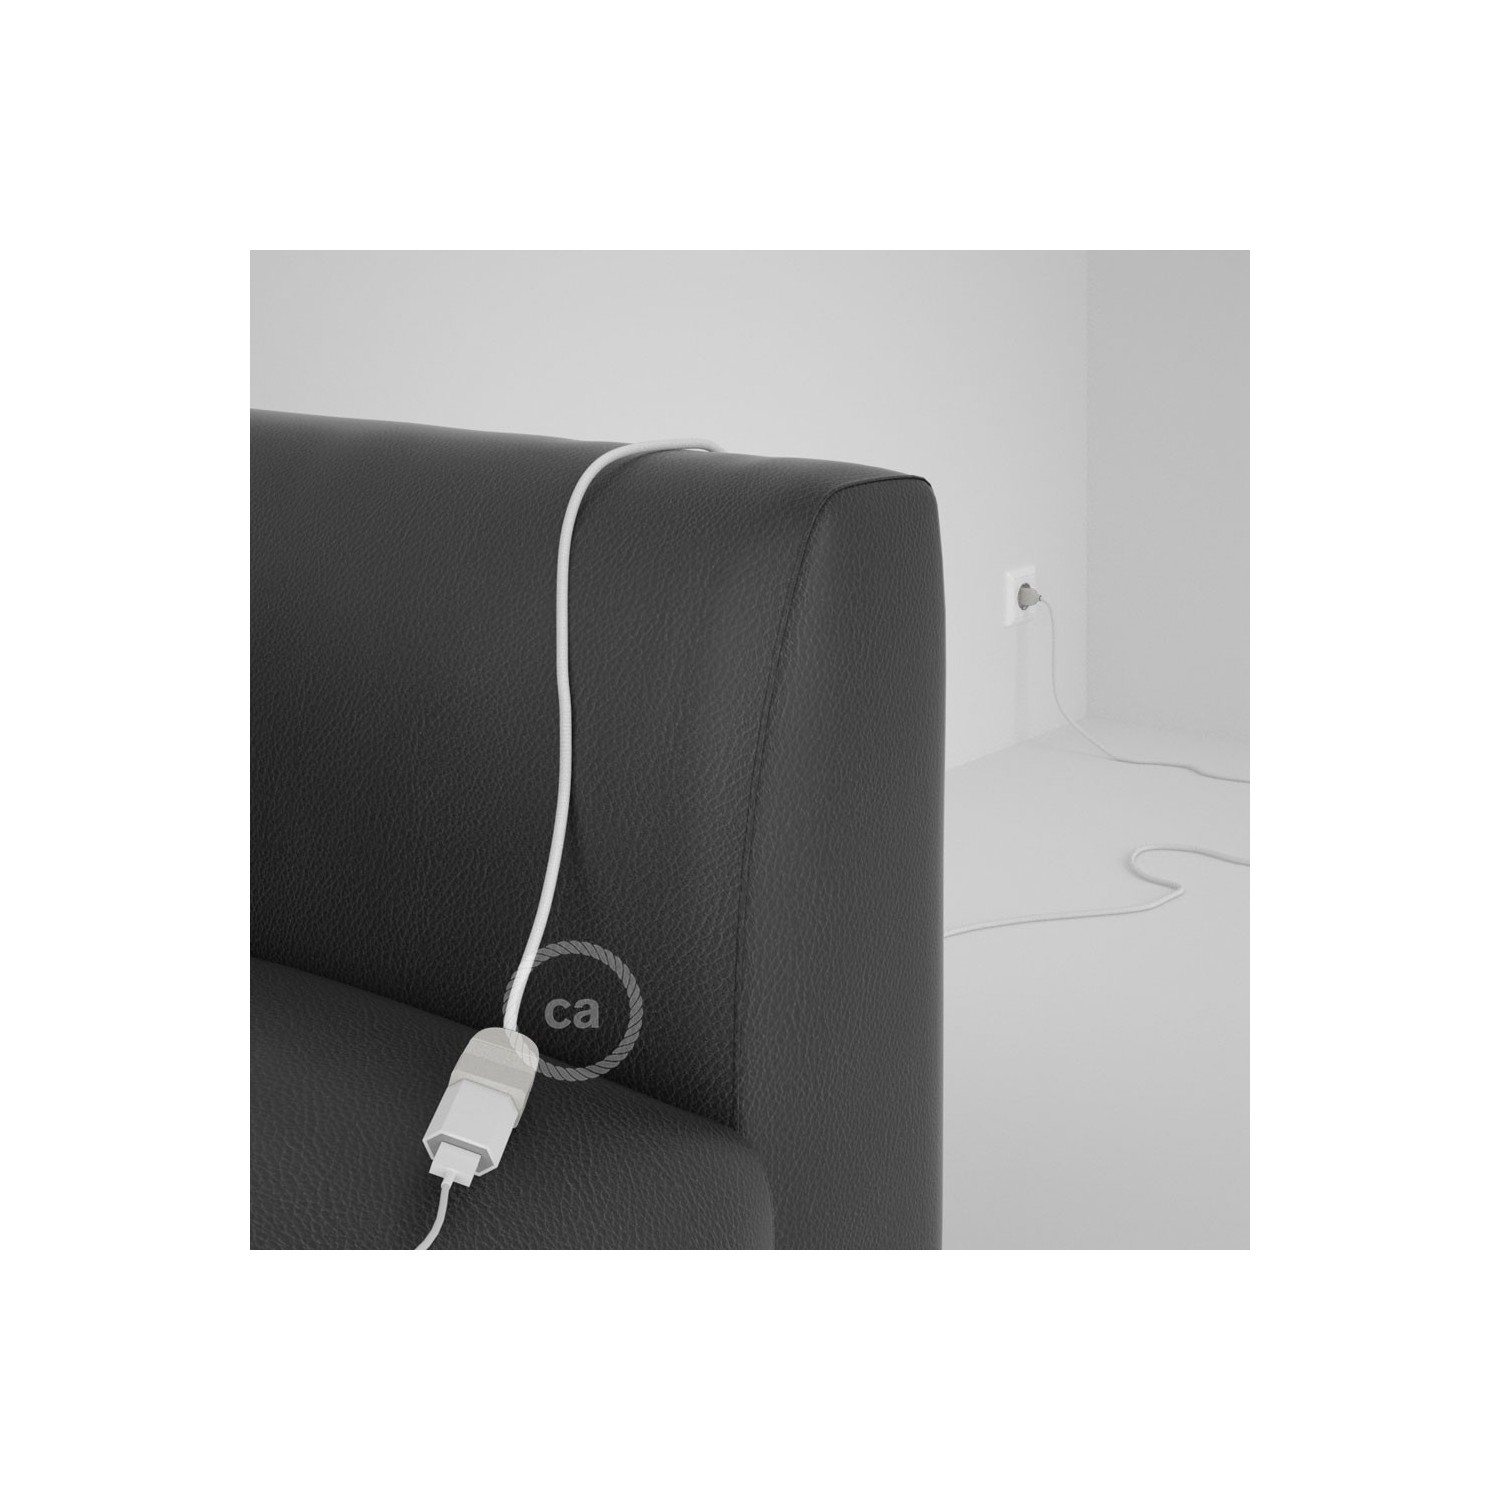 Alargador eléctrico con cable textil RM01 Efecto Seda Blanco 2P 10A Made in Italy.